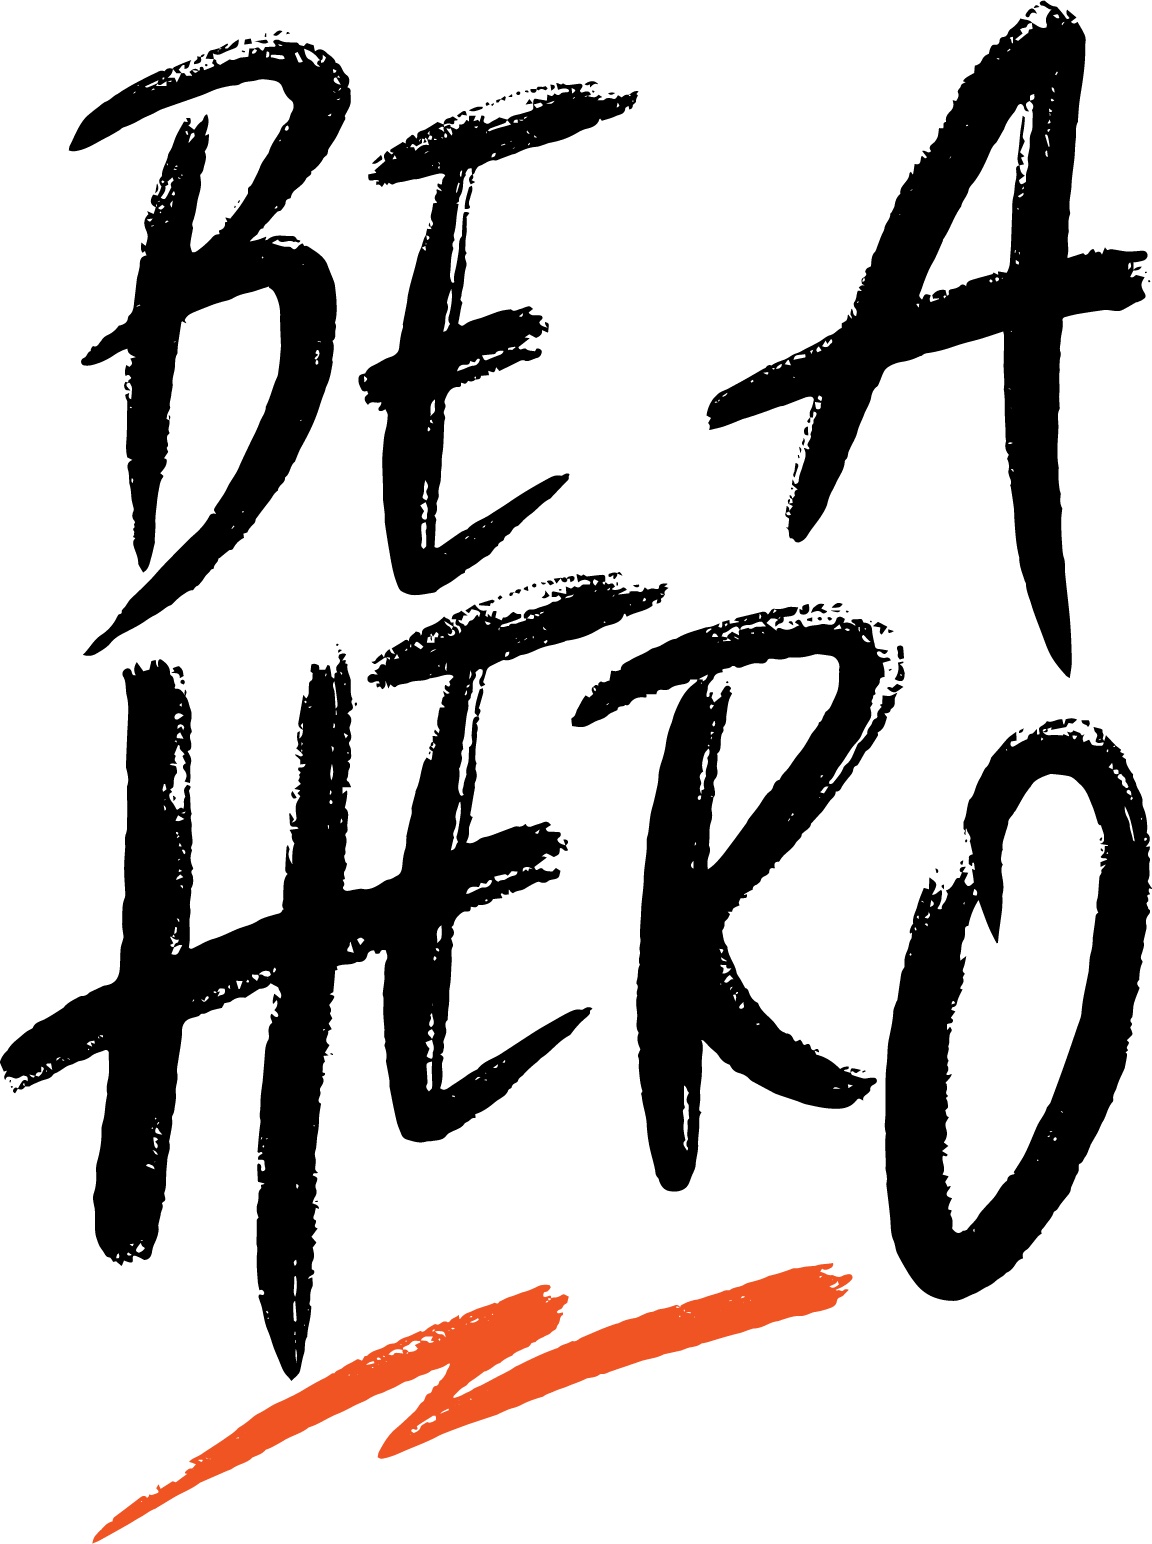 Be A Hero